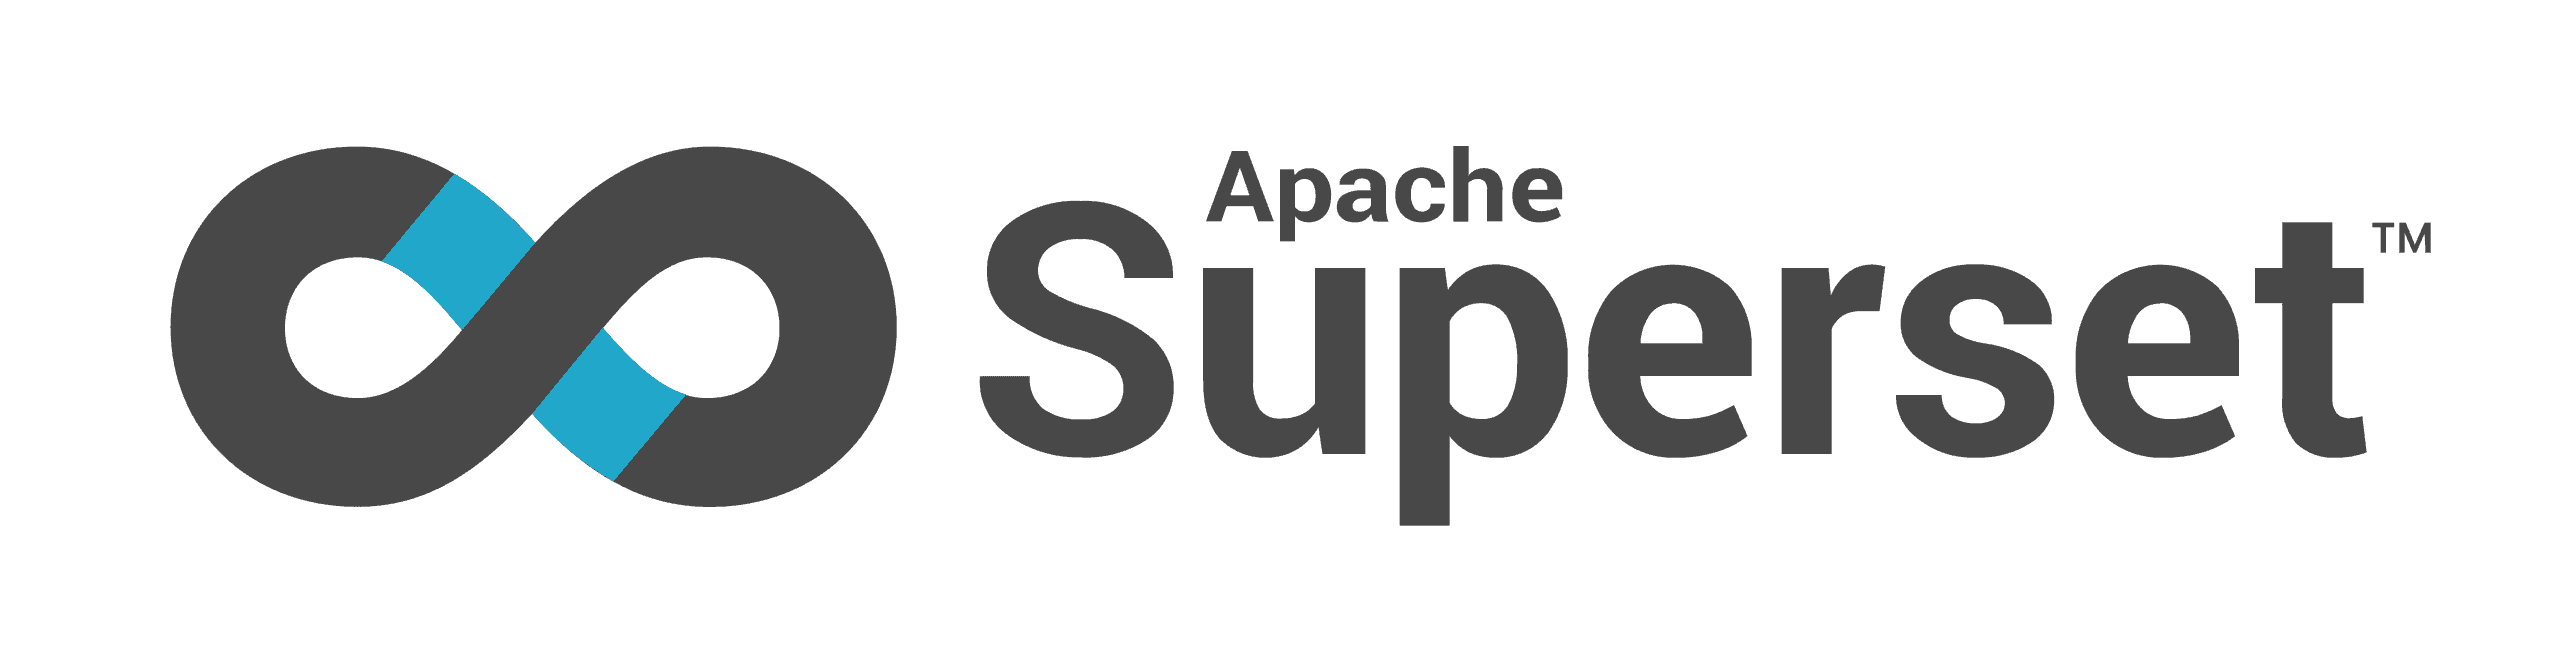 apache superset